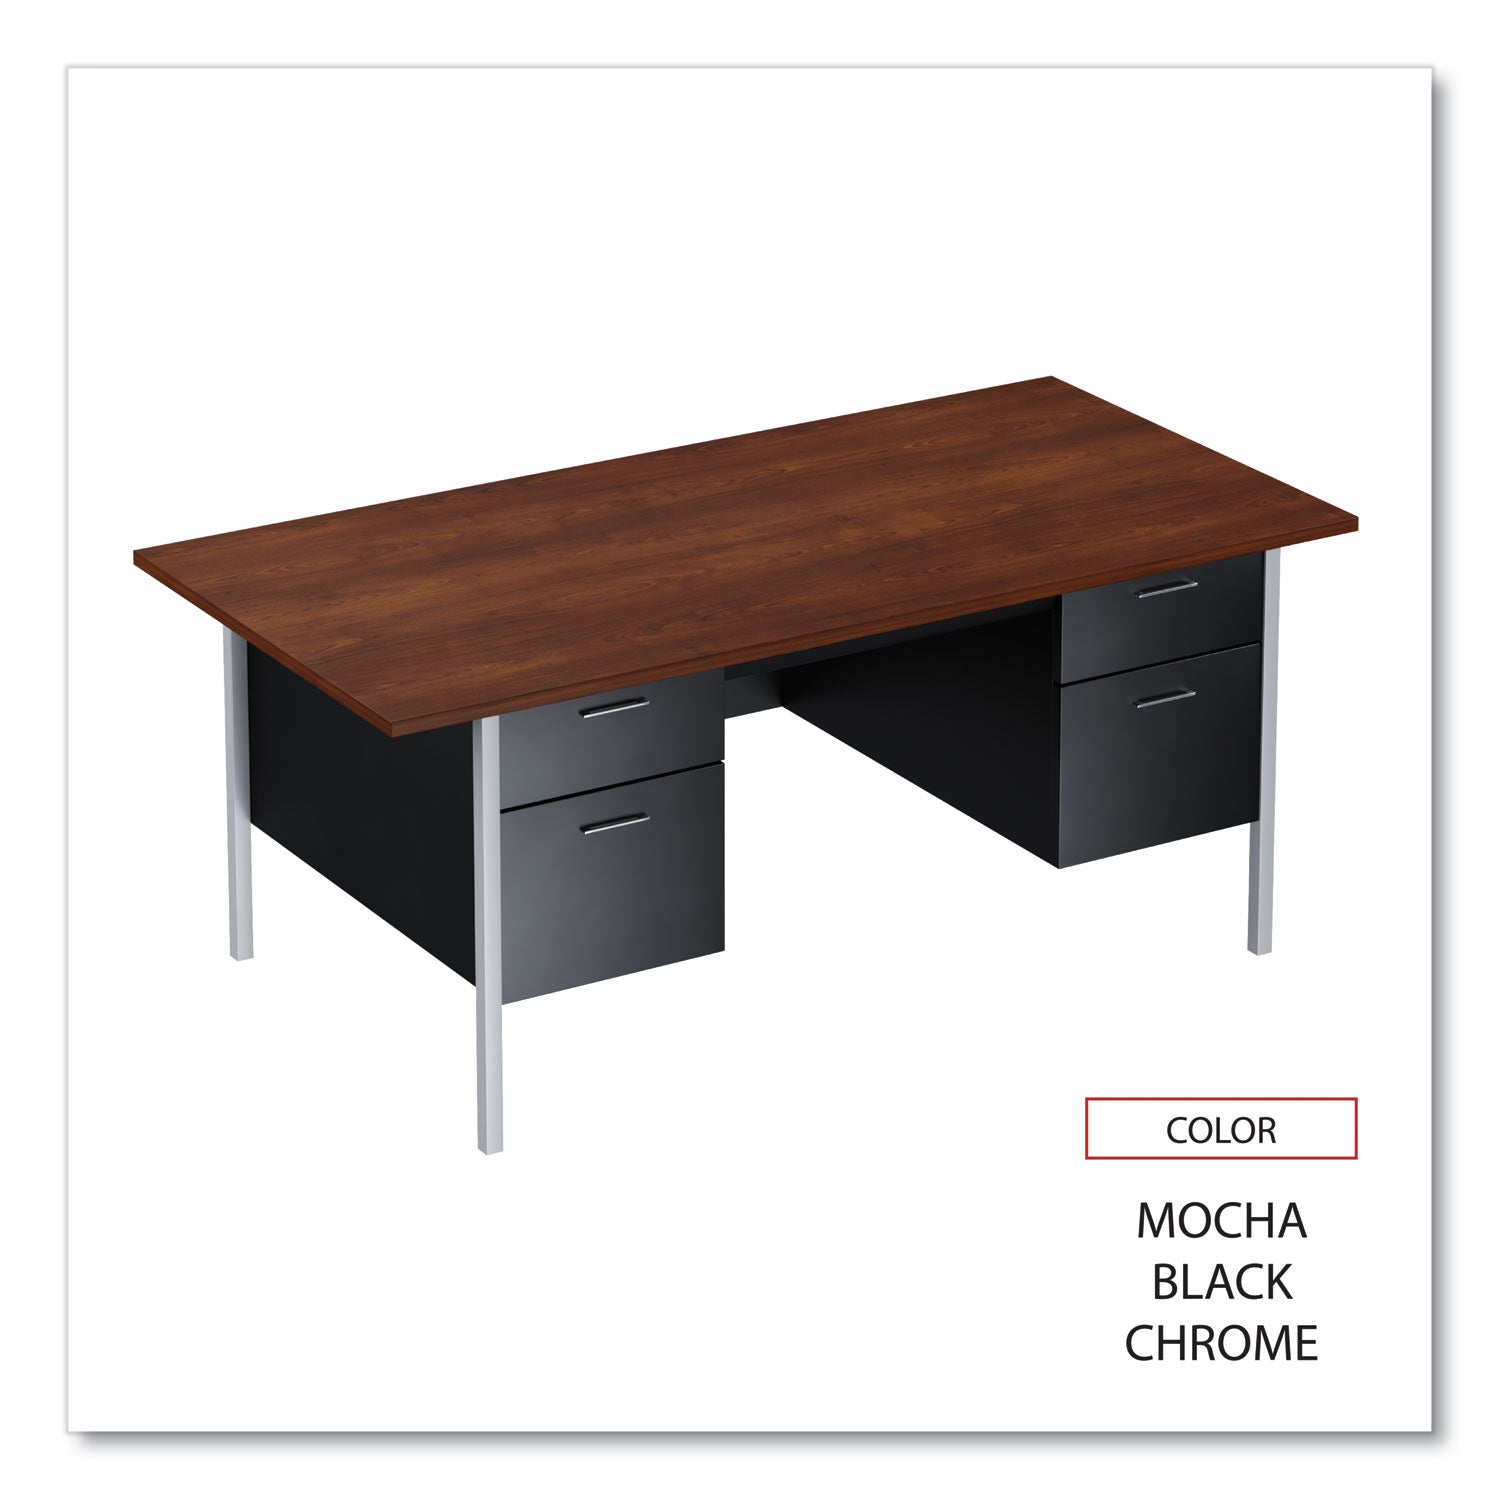 double-pedestal-steel-desk-72-x-36-x-295-mocha-black-chrome-plated-legs_alesd7236bm - 4